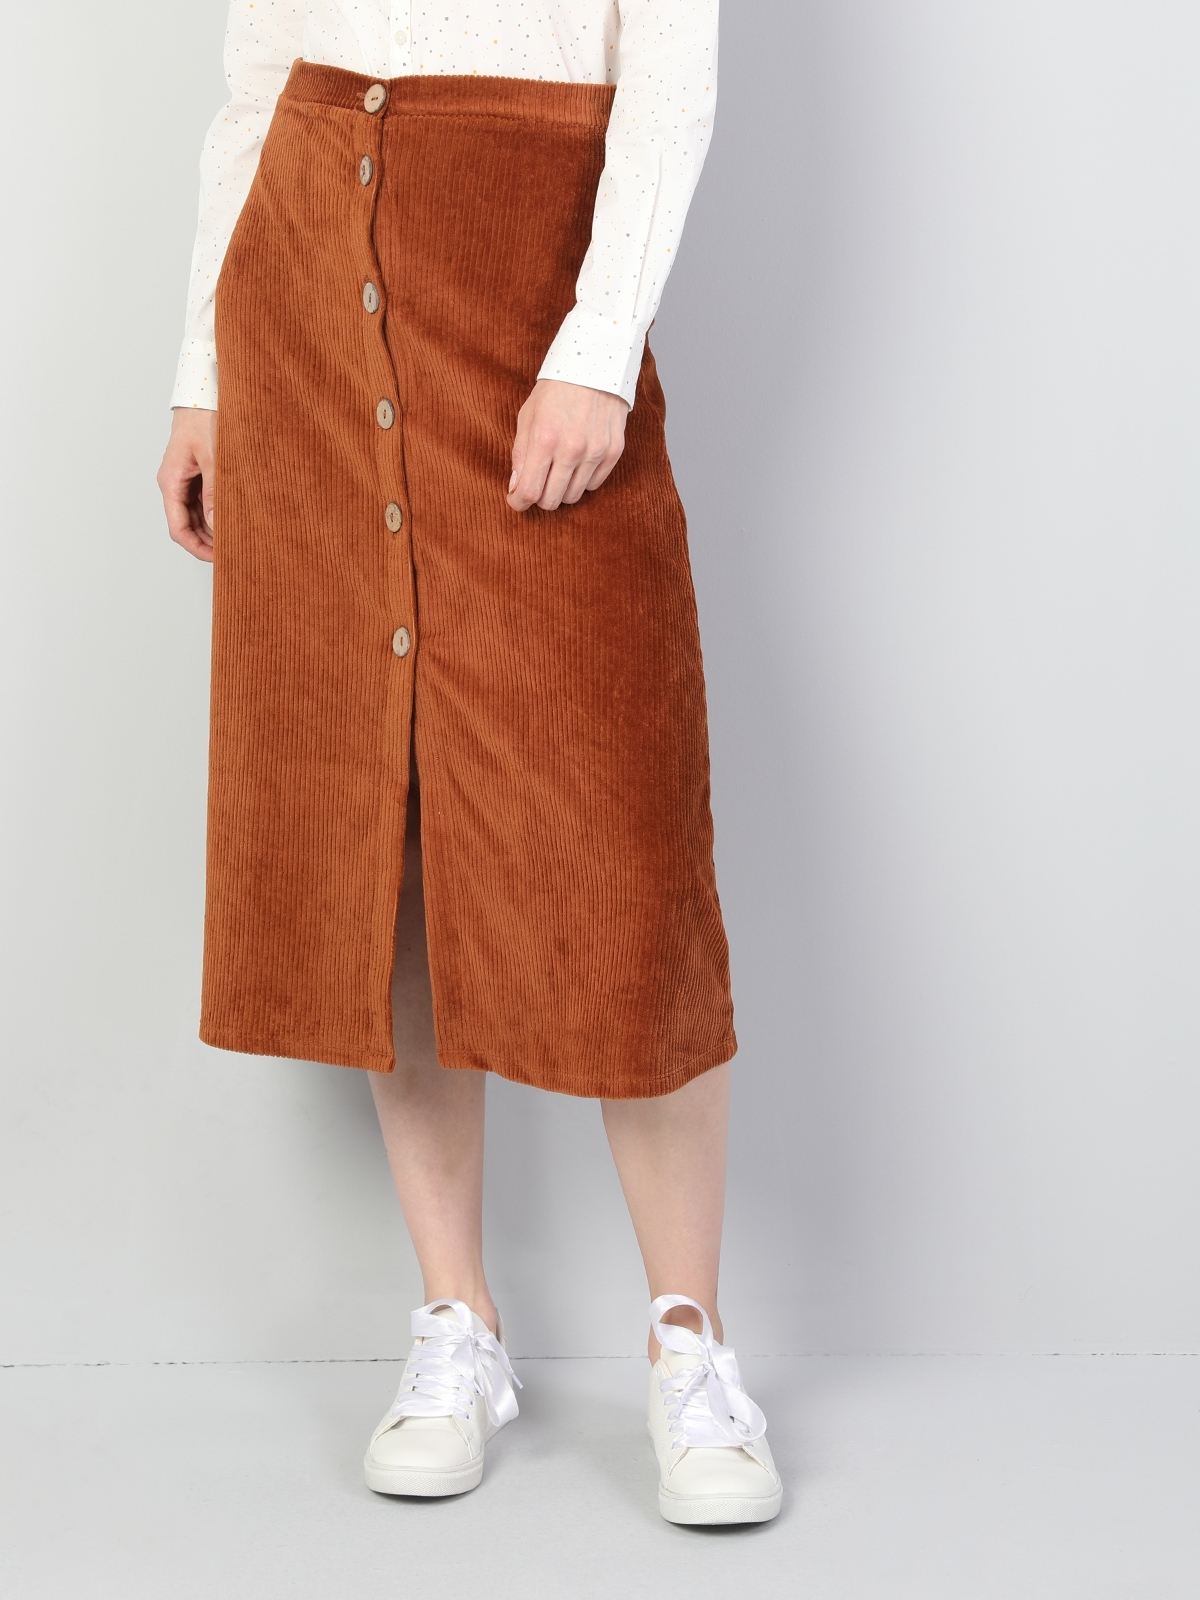 Colins Brown Woman Skirt. 5